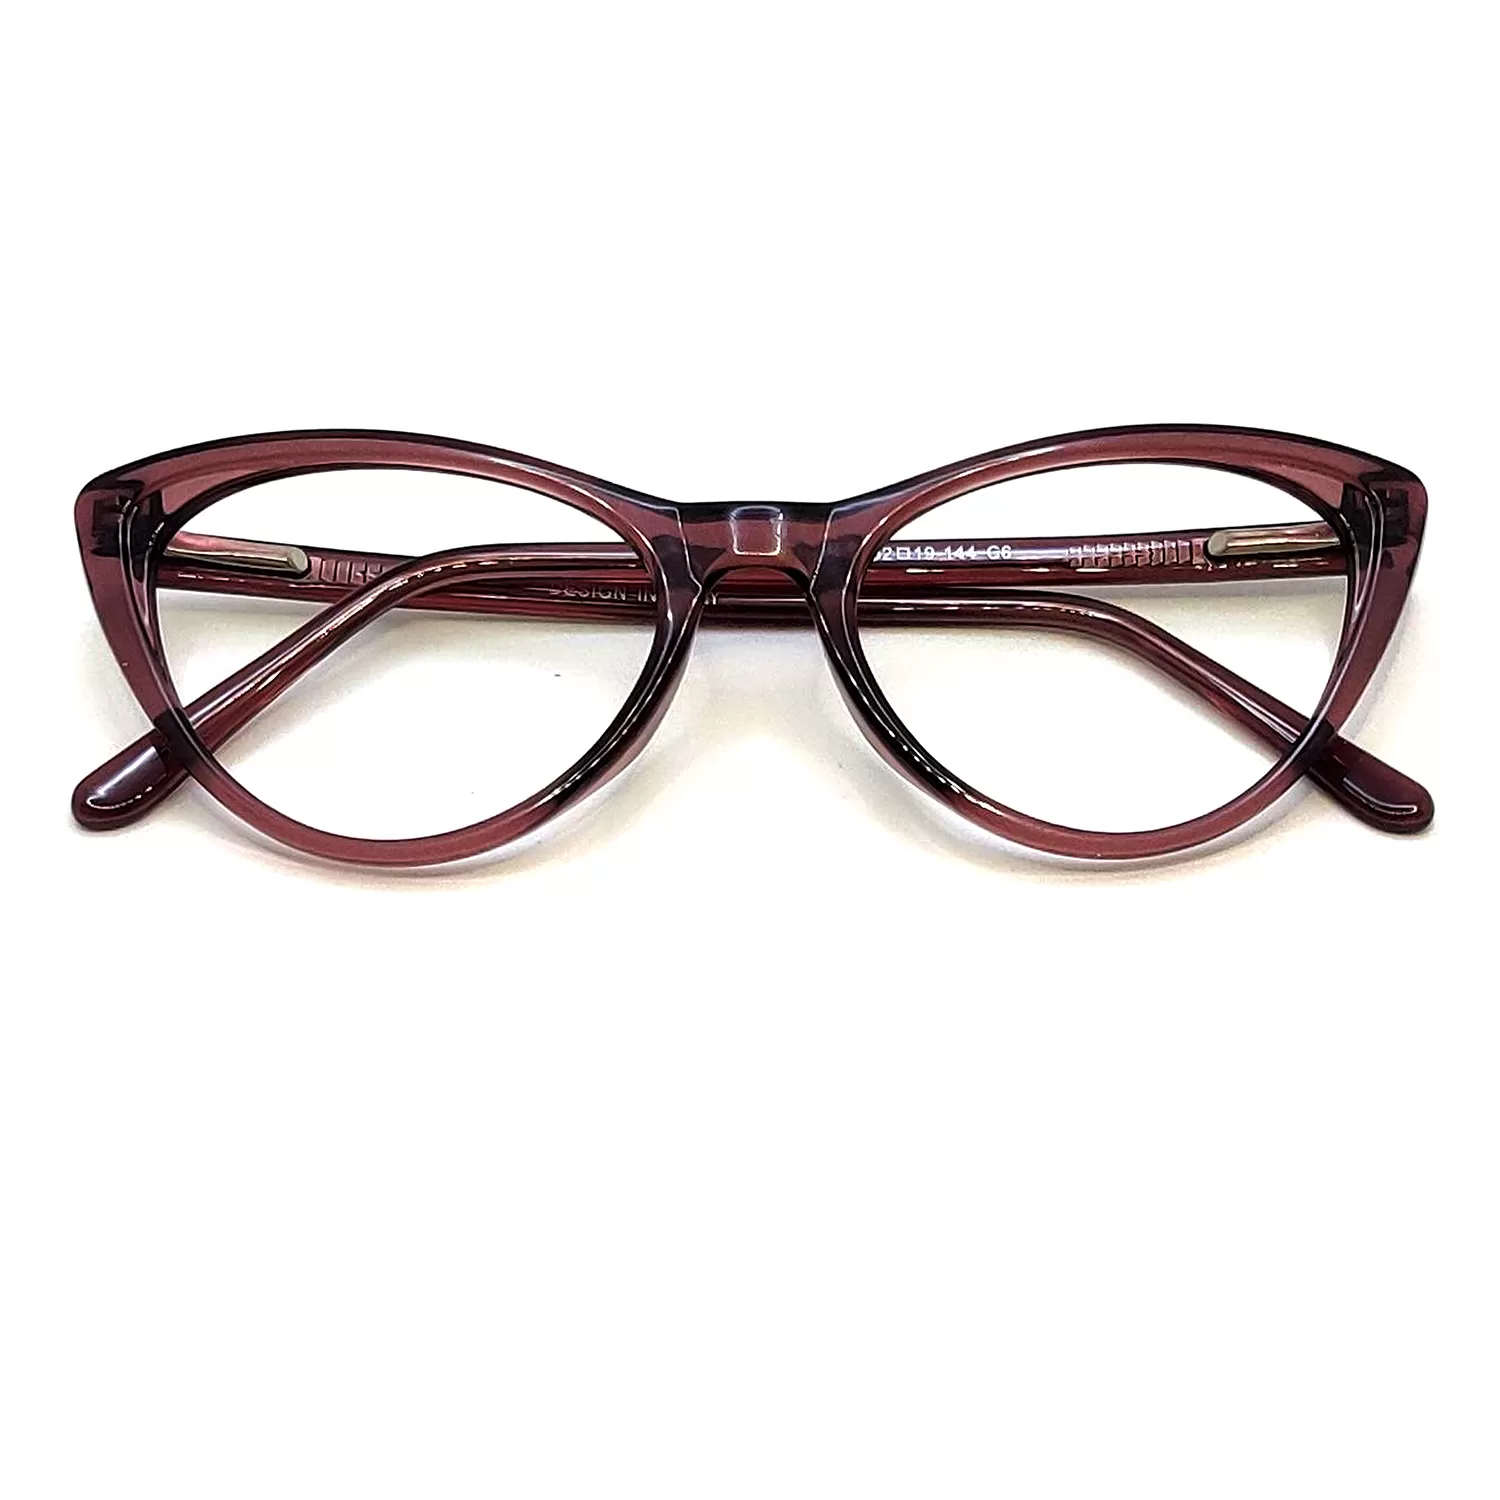 Buy cateye eyeglasses online at chashmah.com